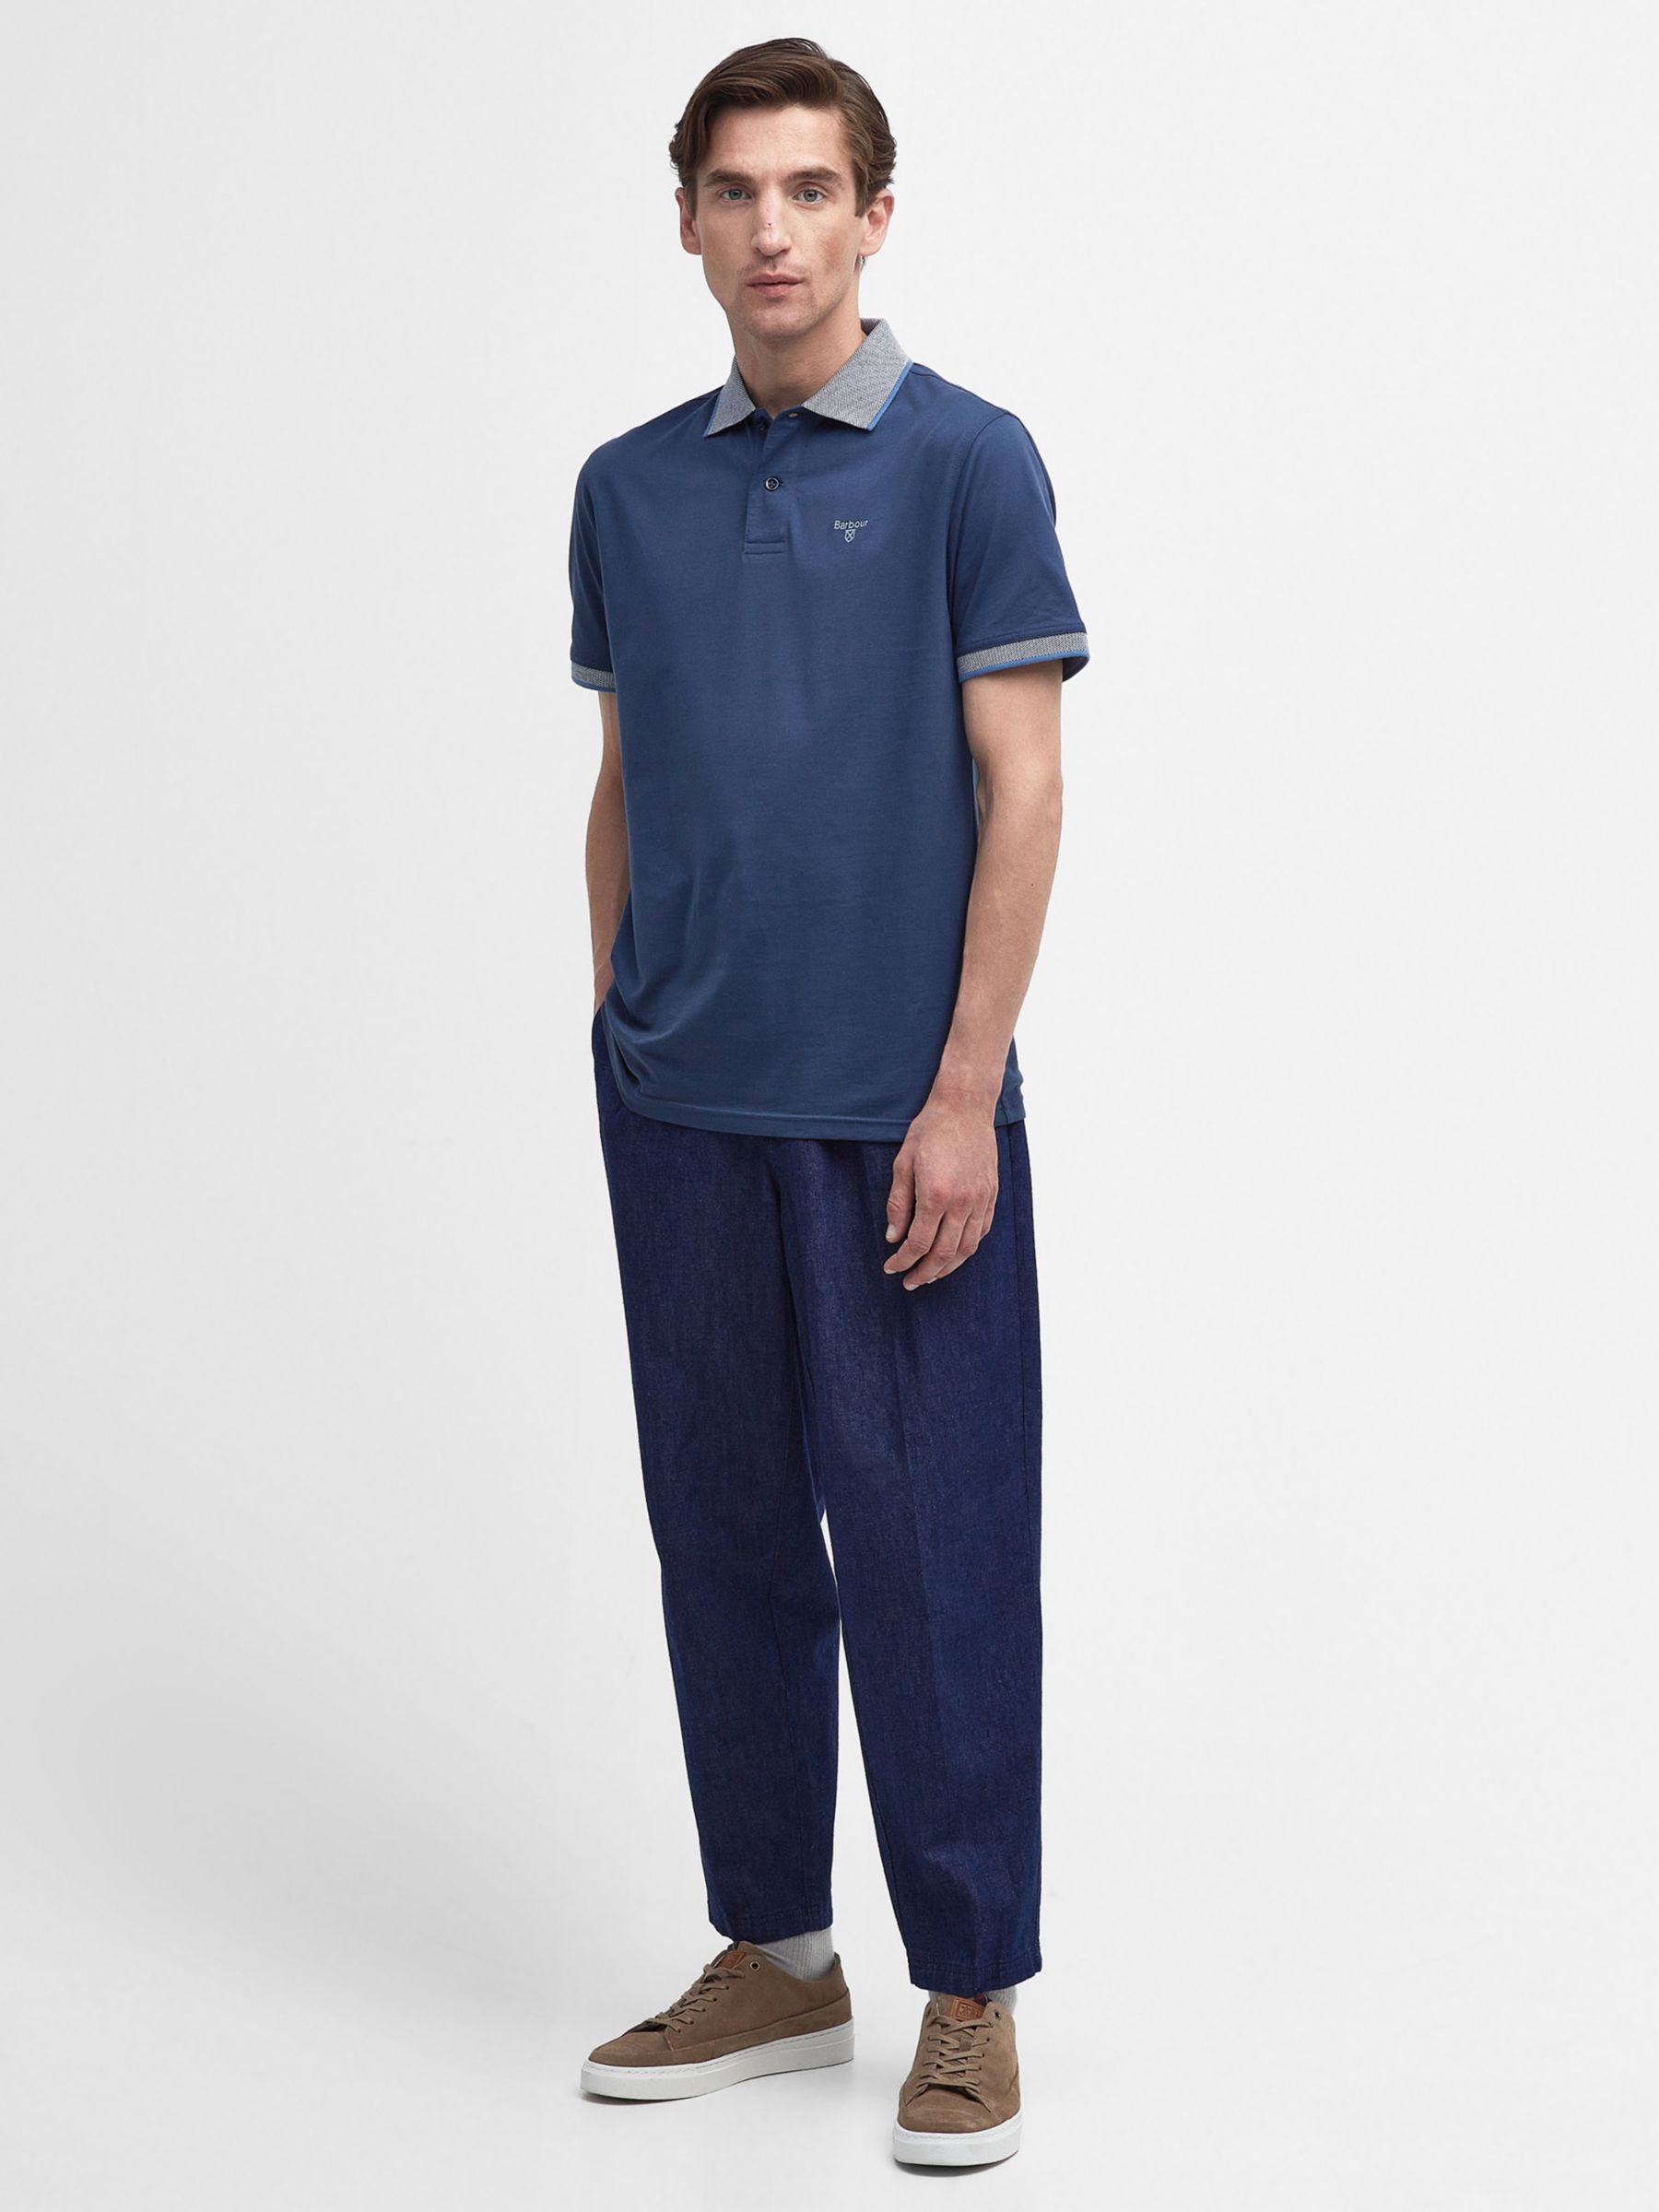 Barbour Cornsay Polo Shirt, Denim Blue at John Lewis & Partners